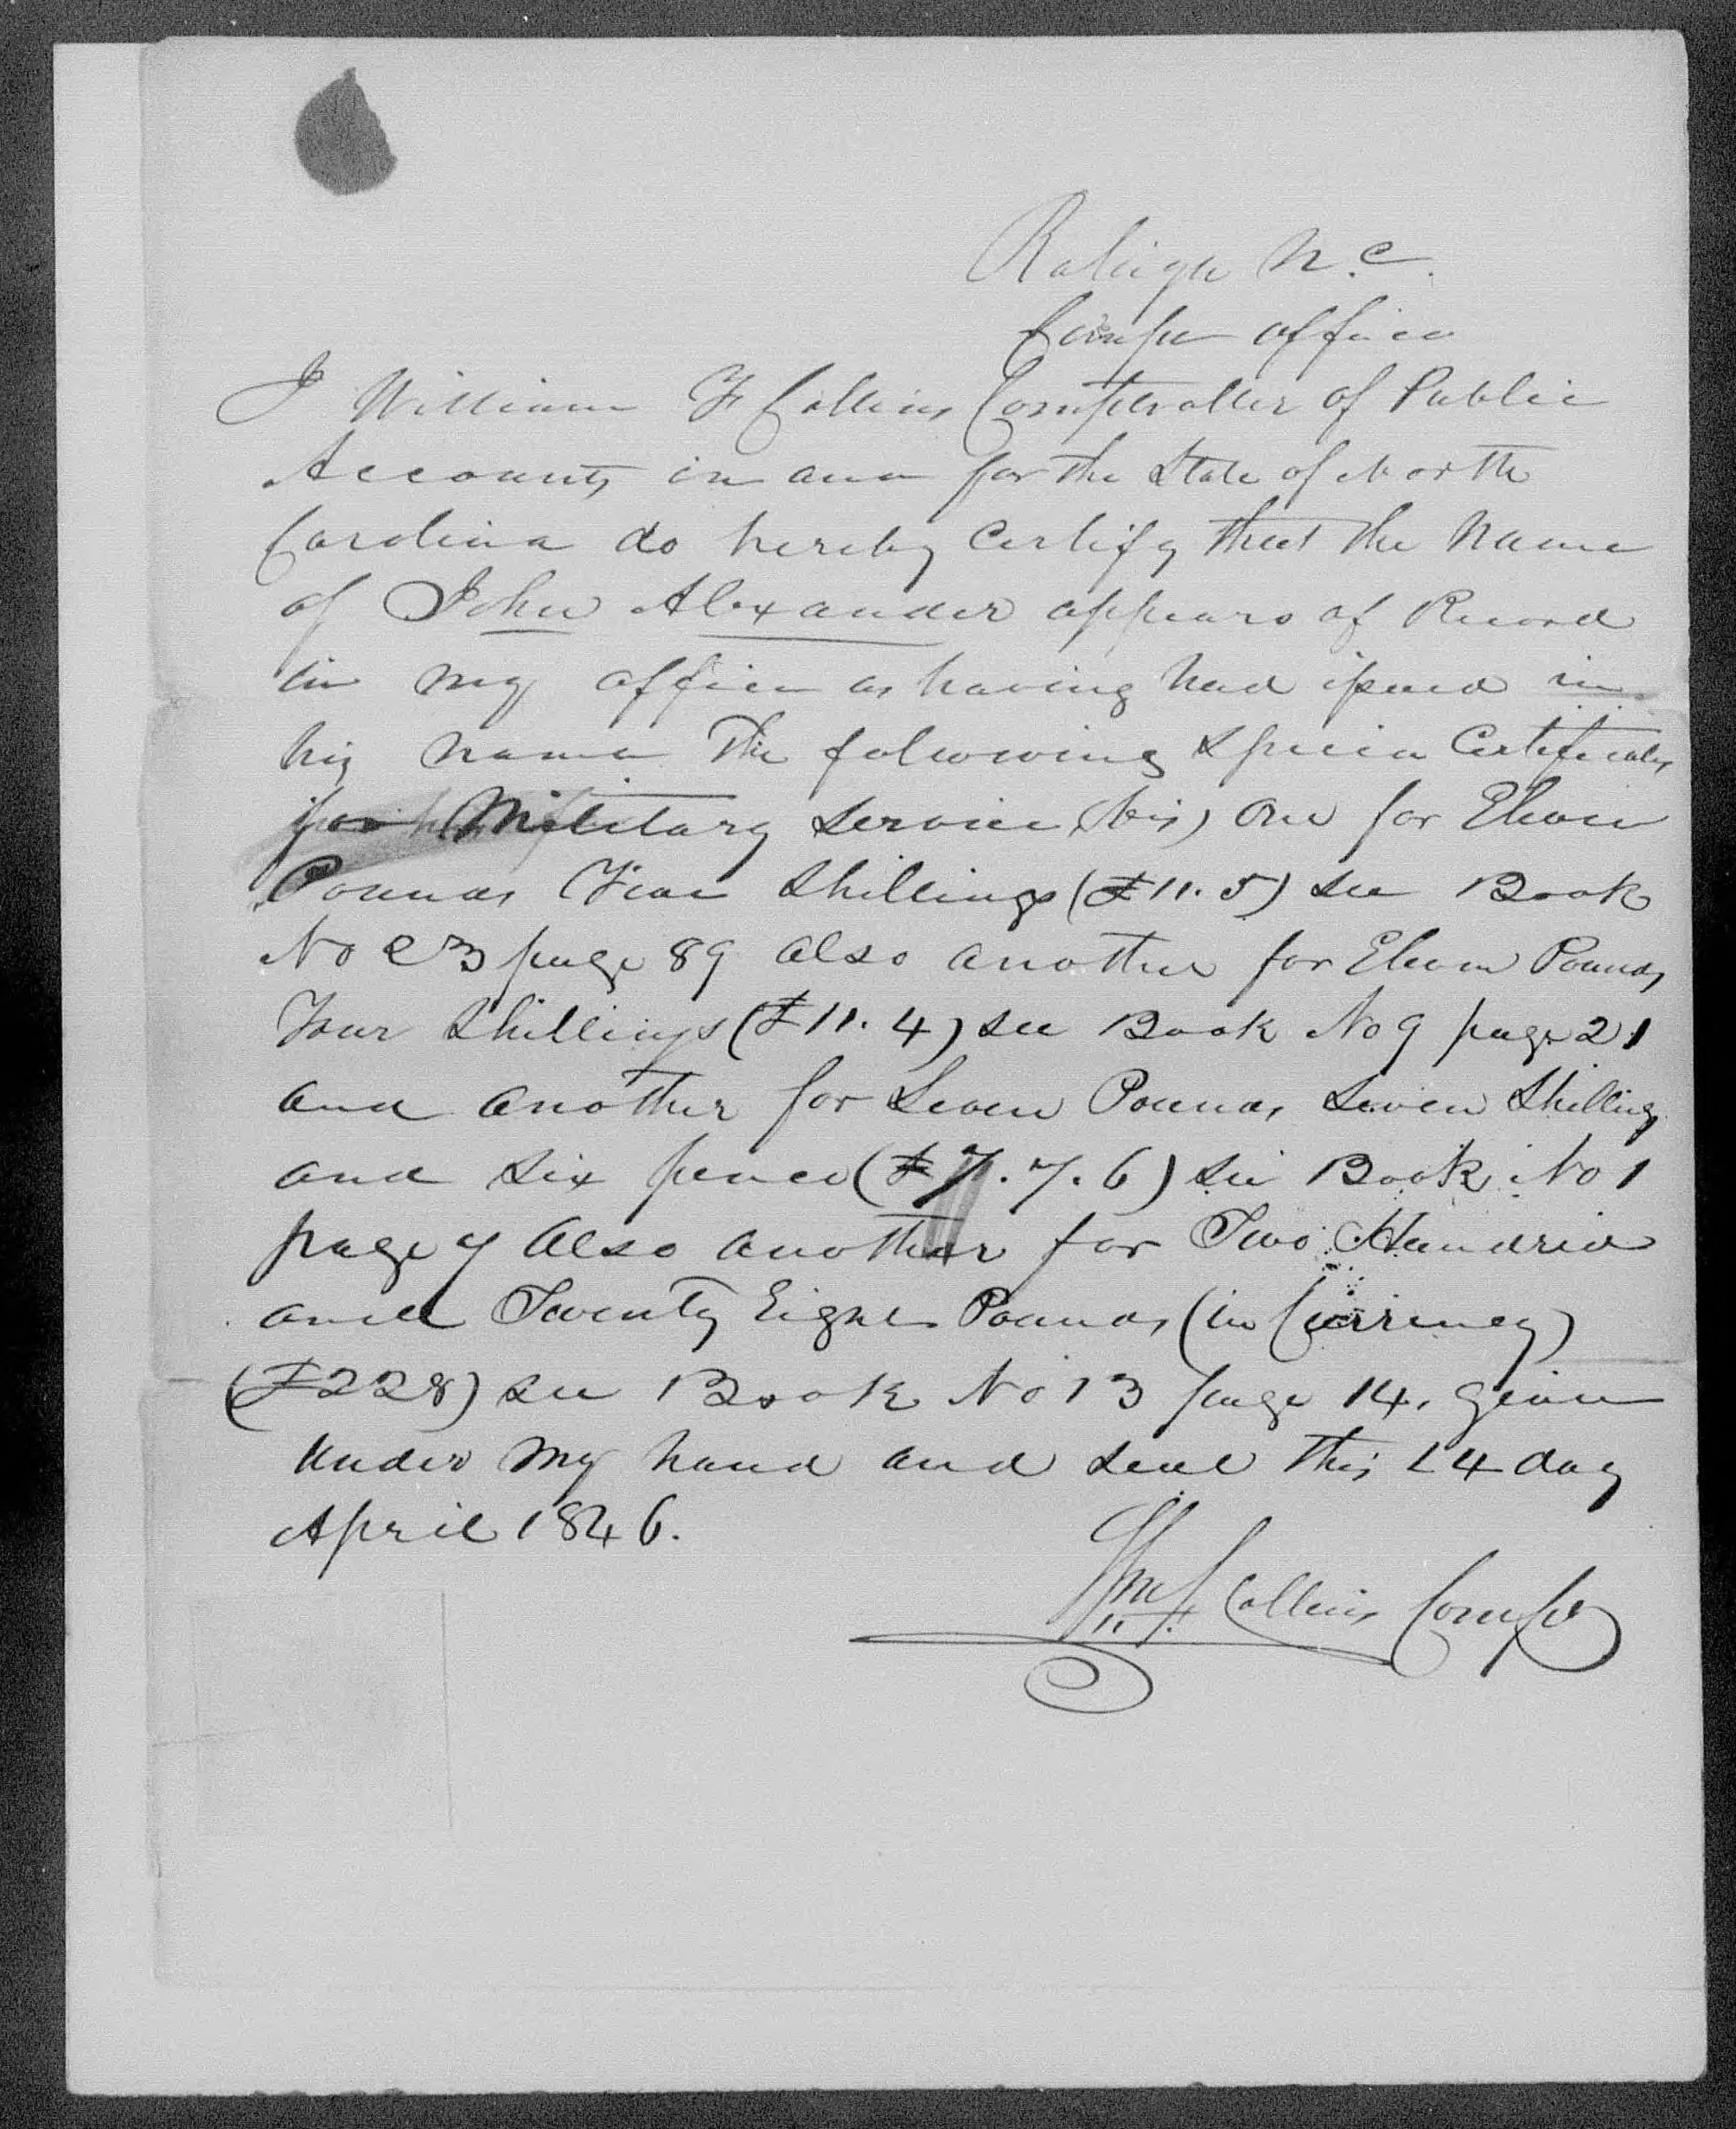 Proof of Service for John Alexander, 14 April 1846